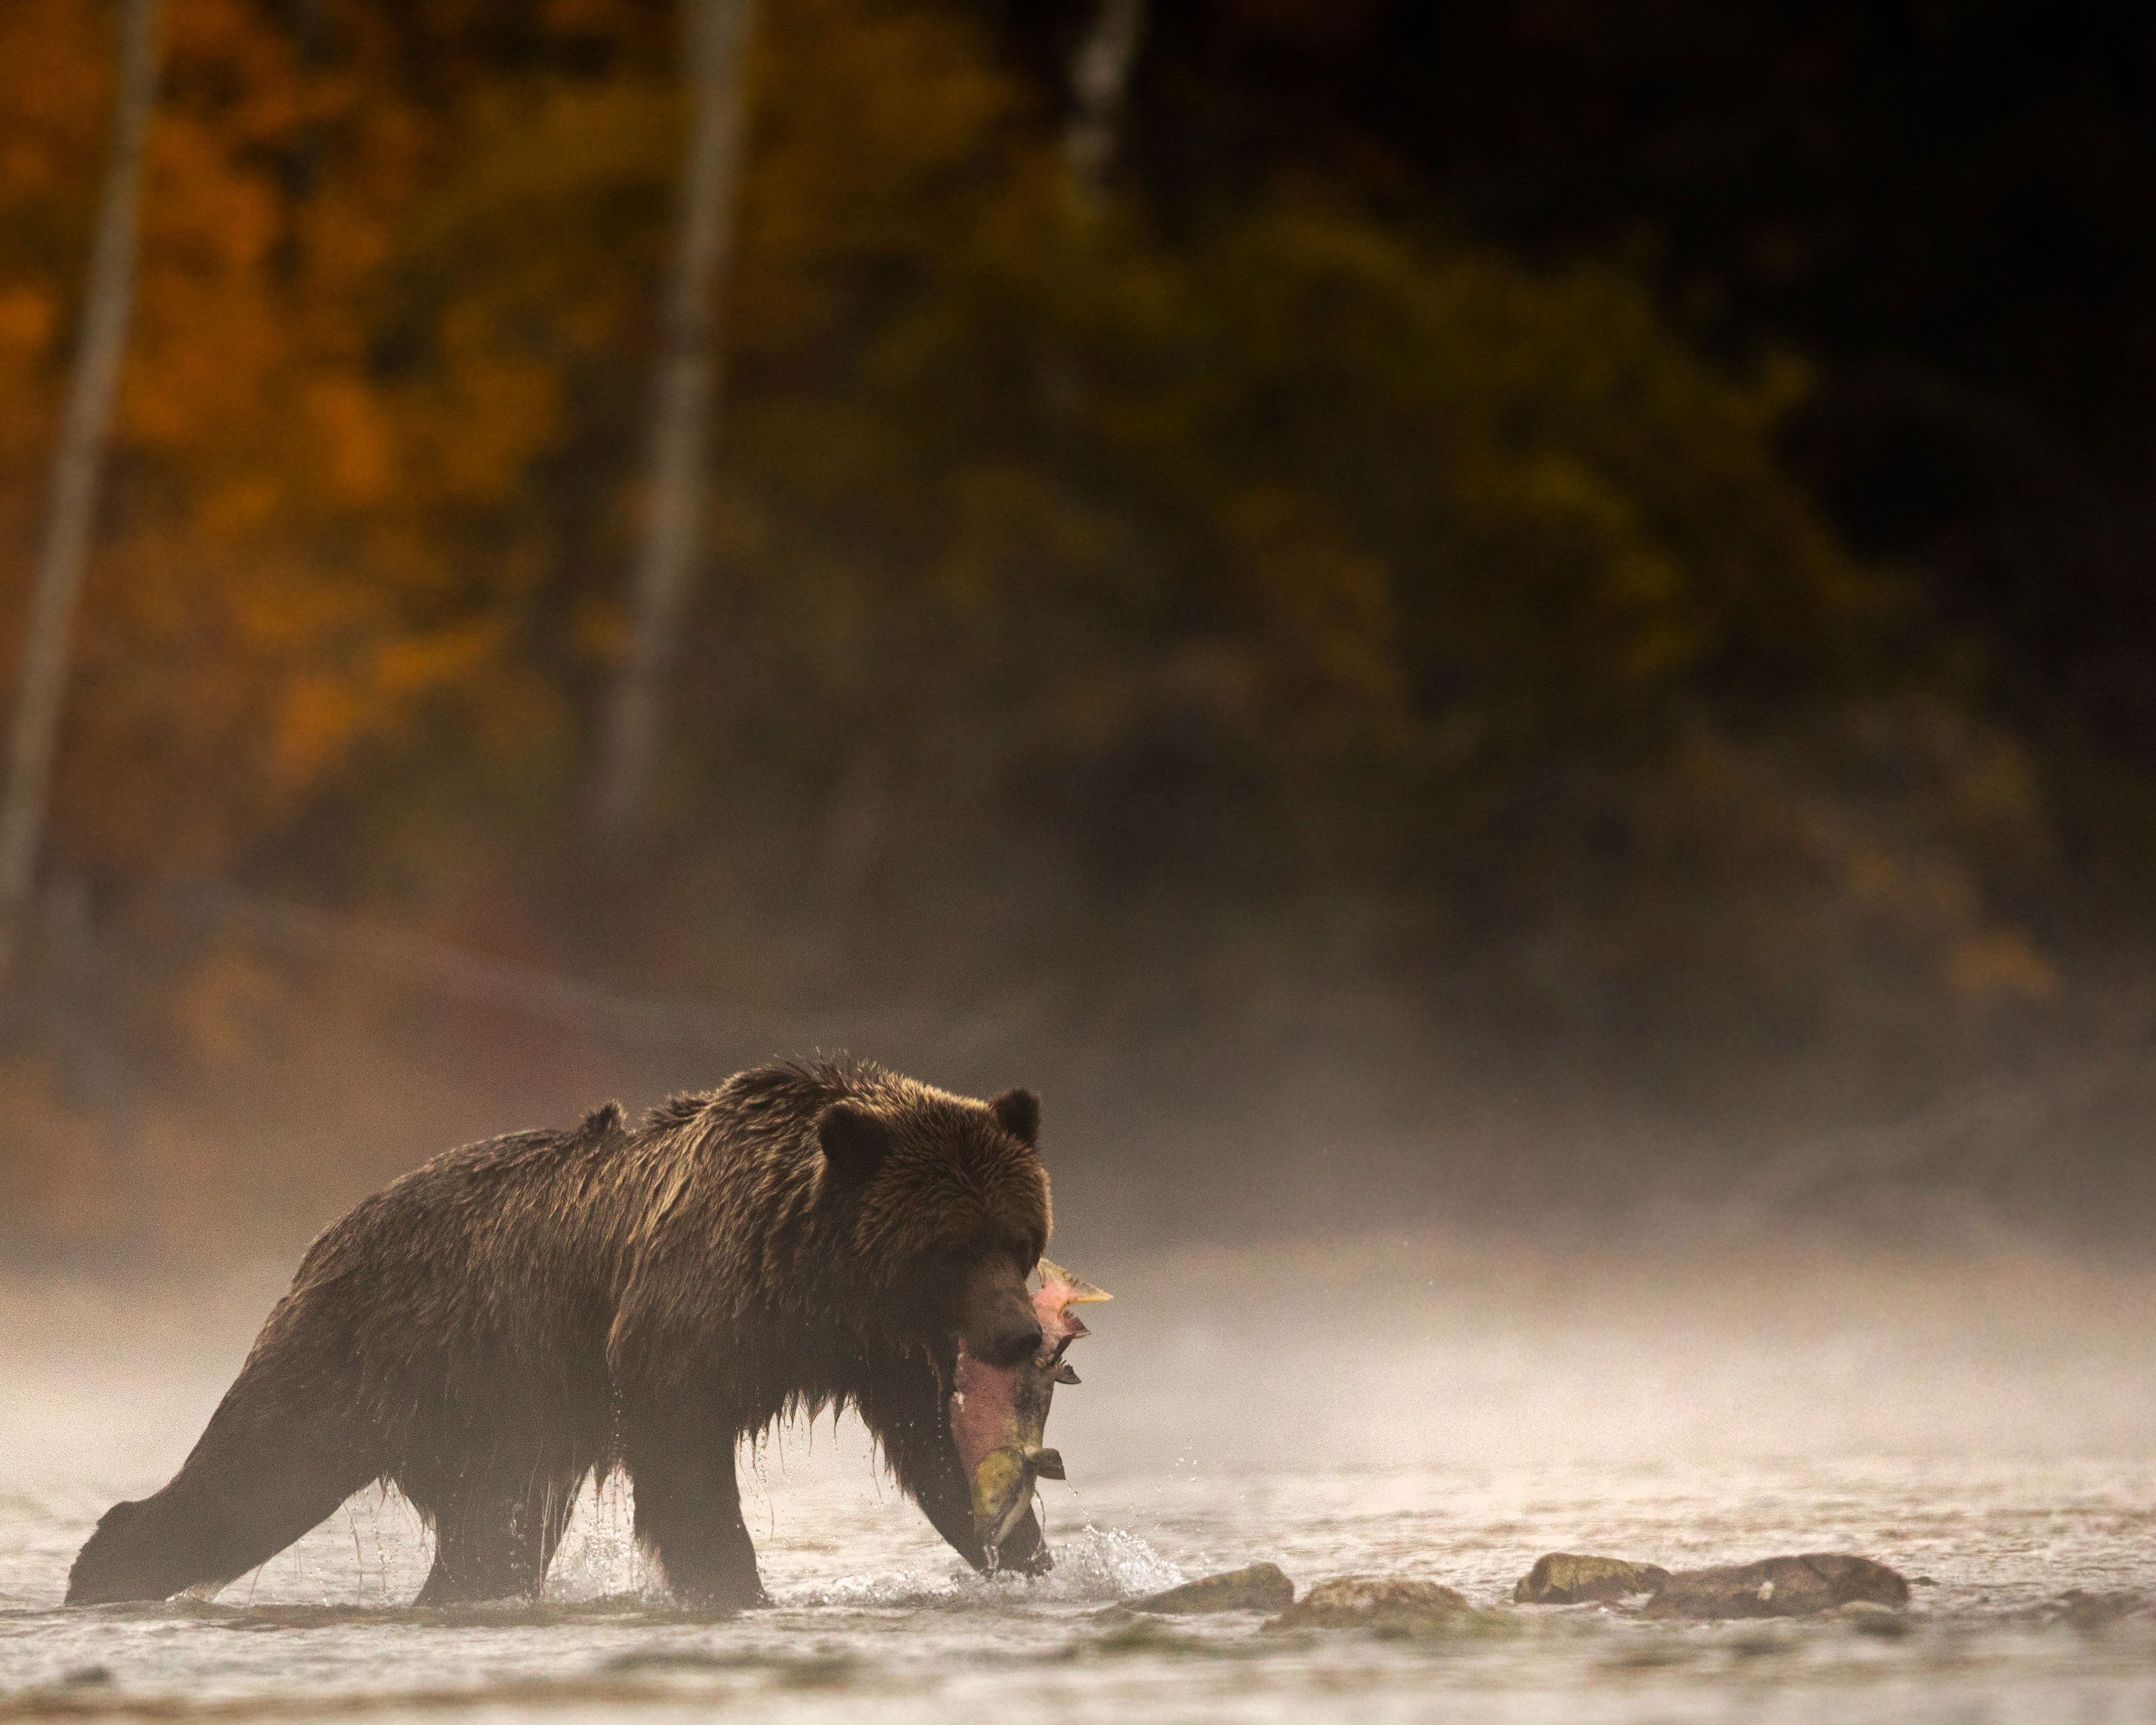 Luxury travel ideas: watching bears catch salmon.